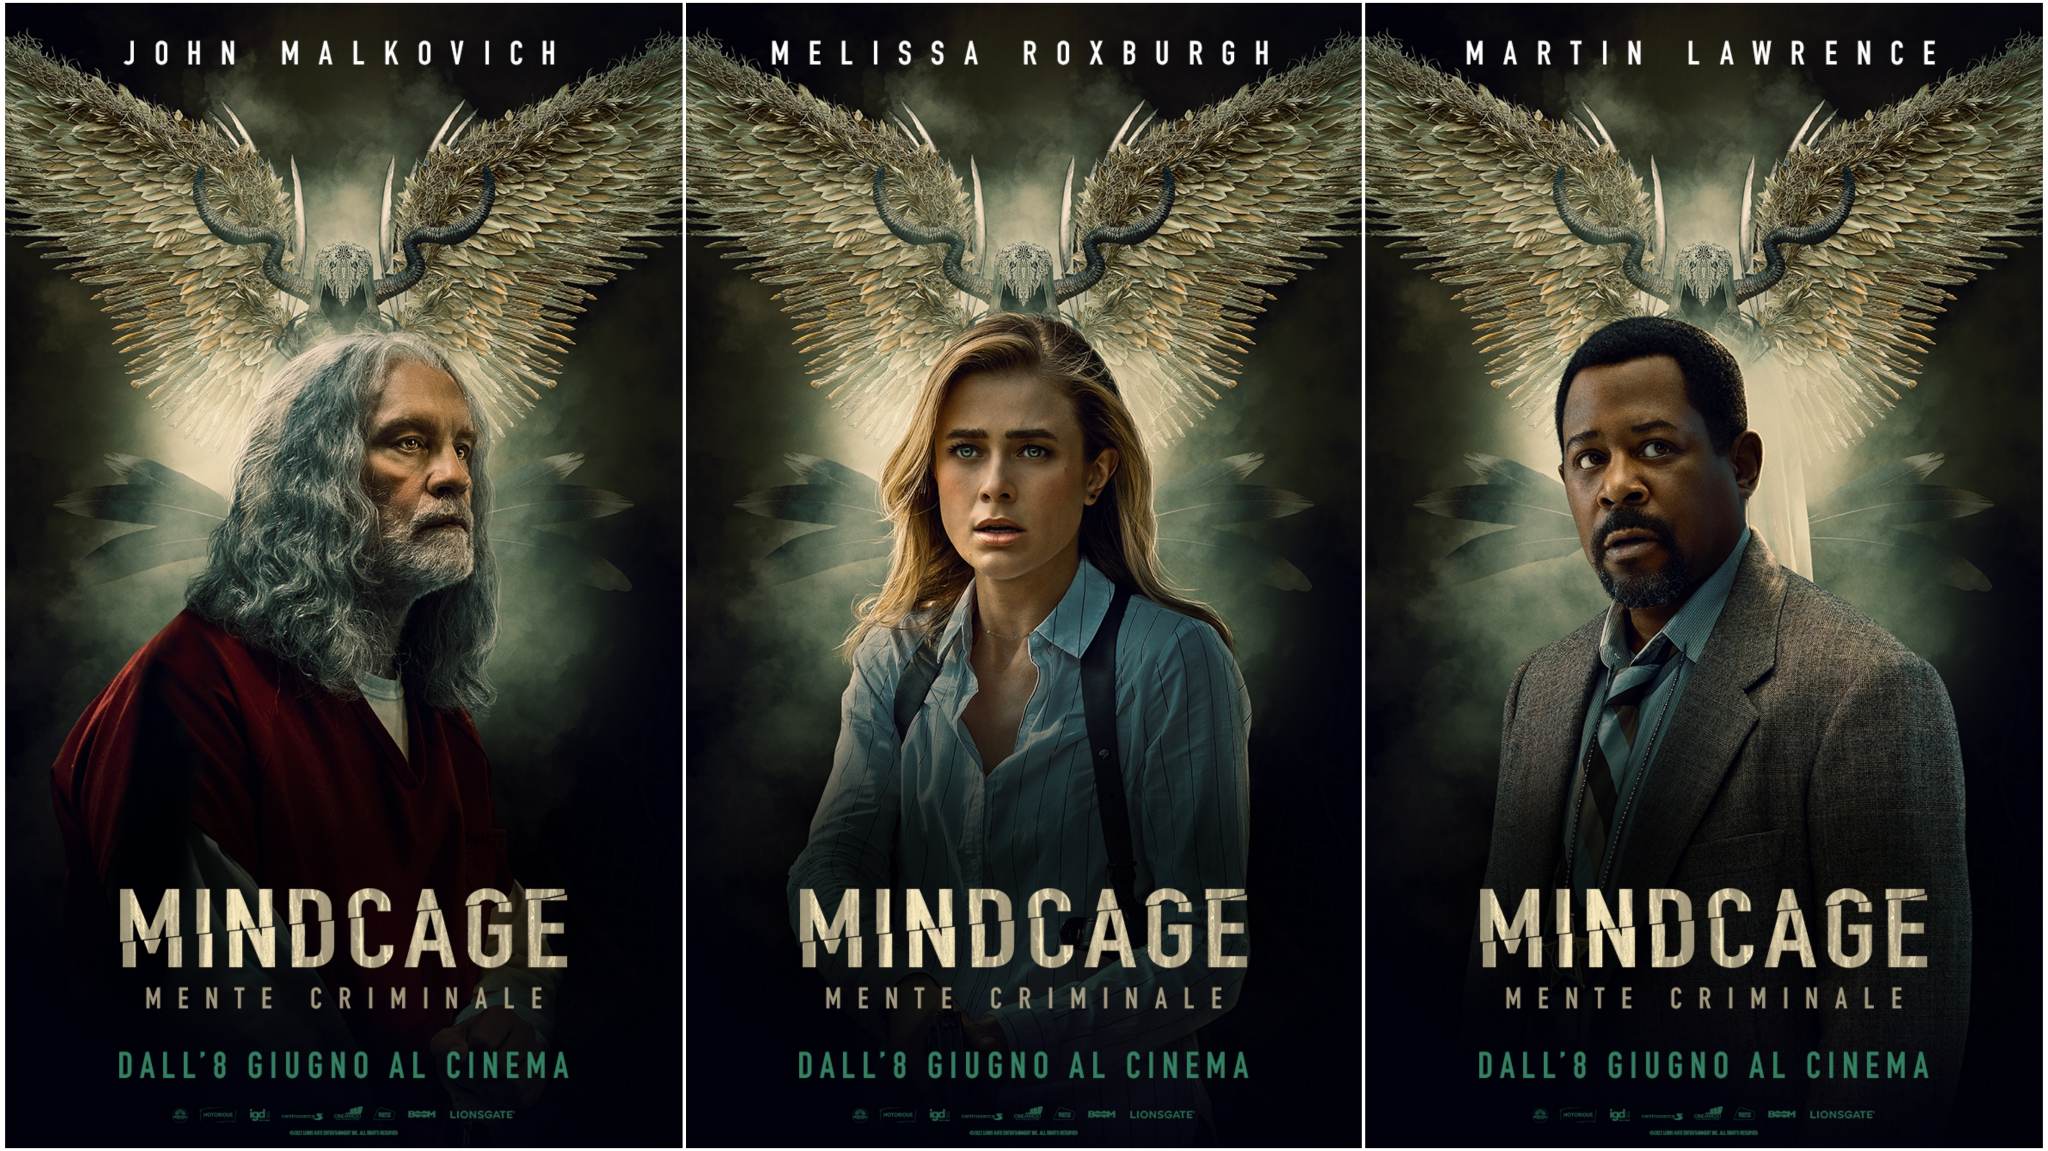 Mindcage – Mente Criminale: i character poster dedicati ai protagonisti